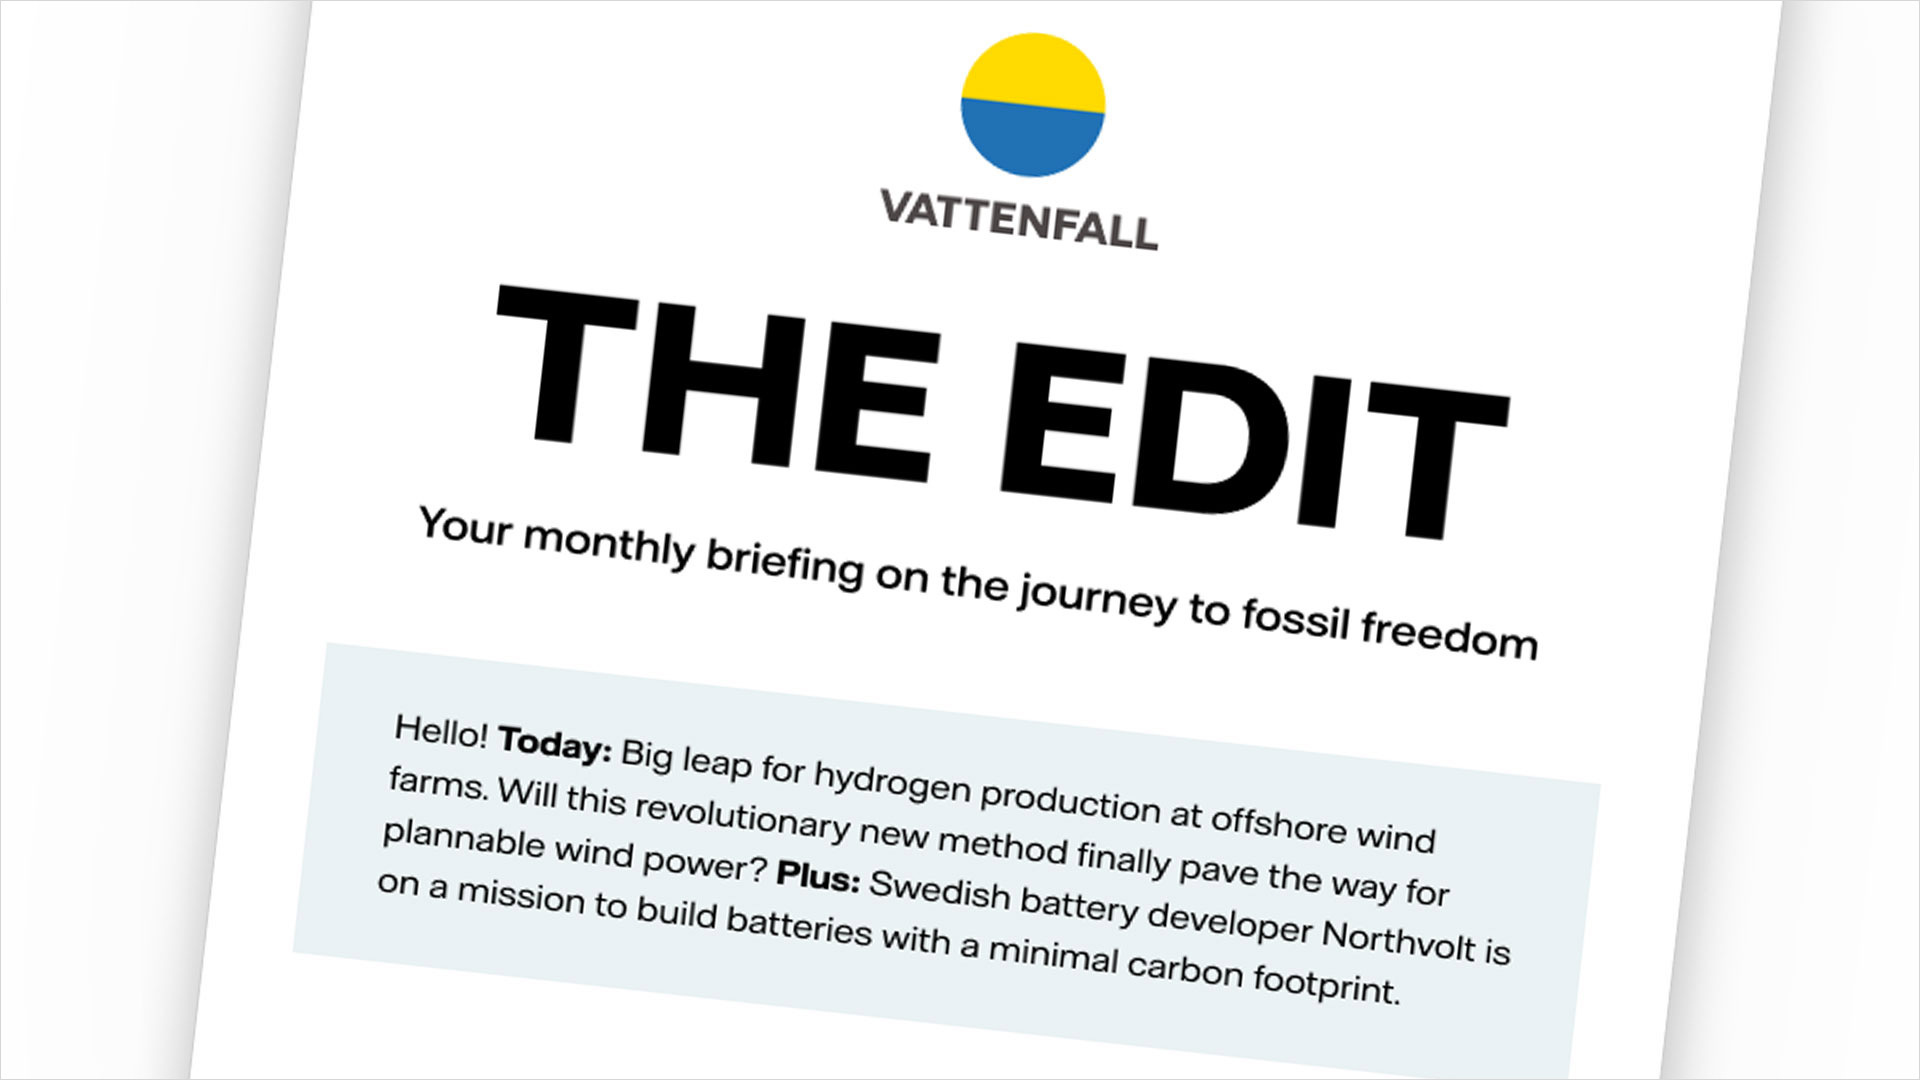 Vattenfall's newsletter THE EDIT